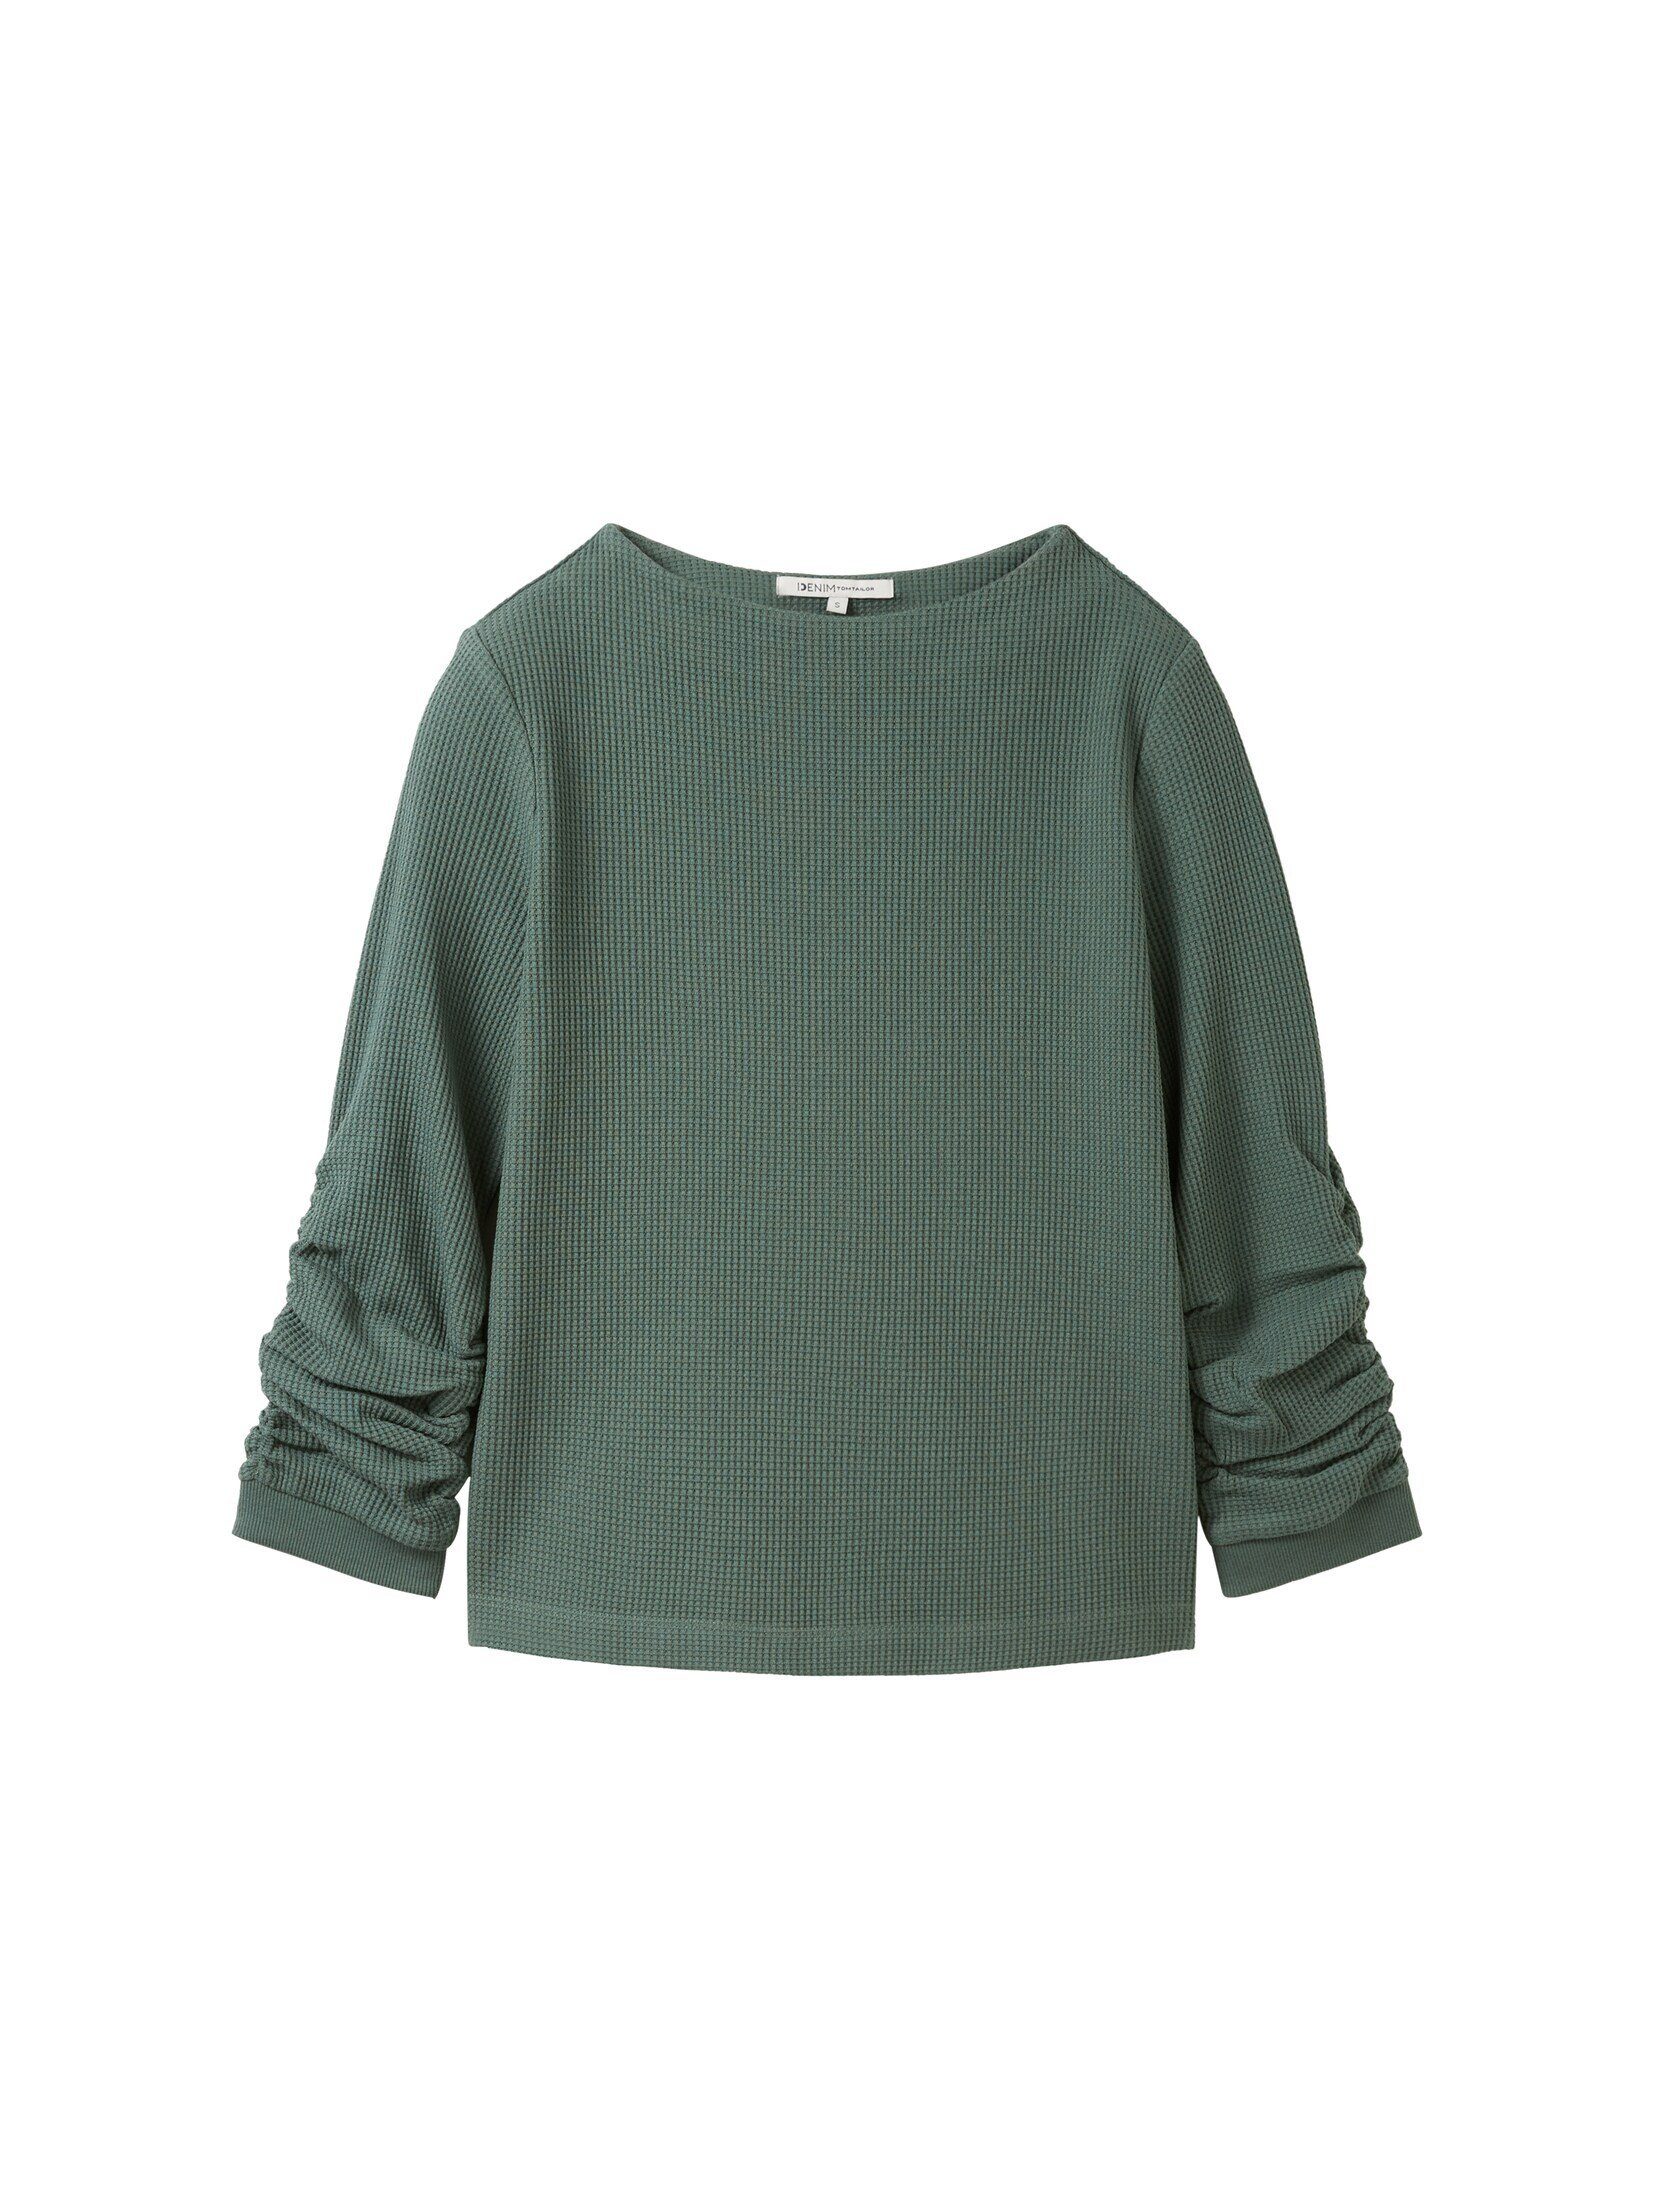 TOM TAILOR Denim Sweatshirt Sweatshirt mit green Falten dust